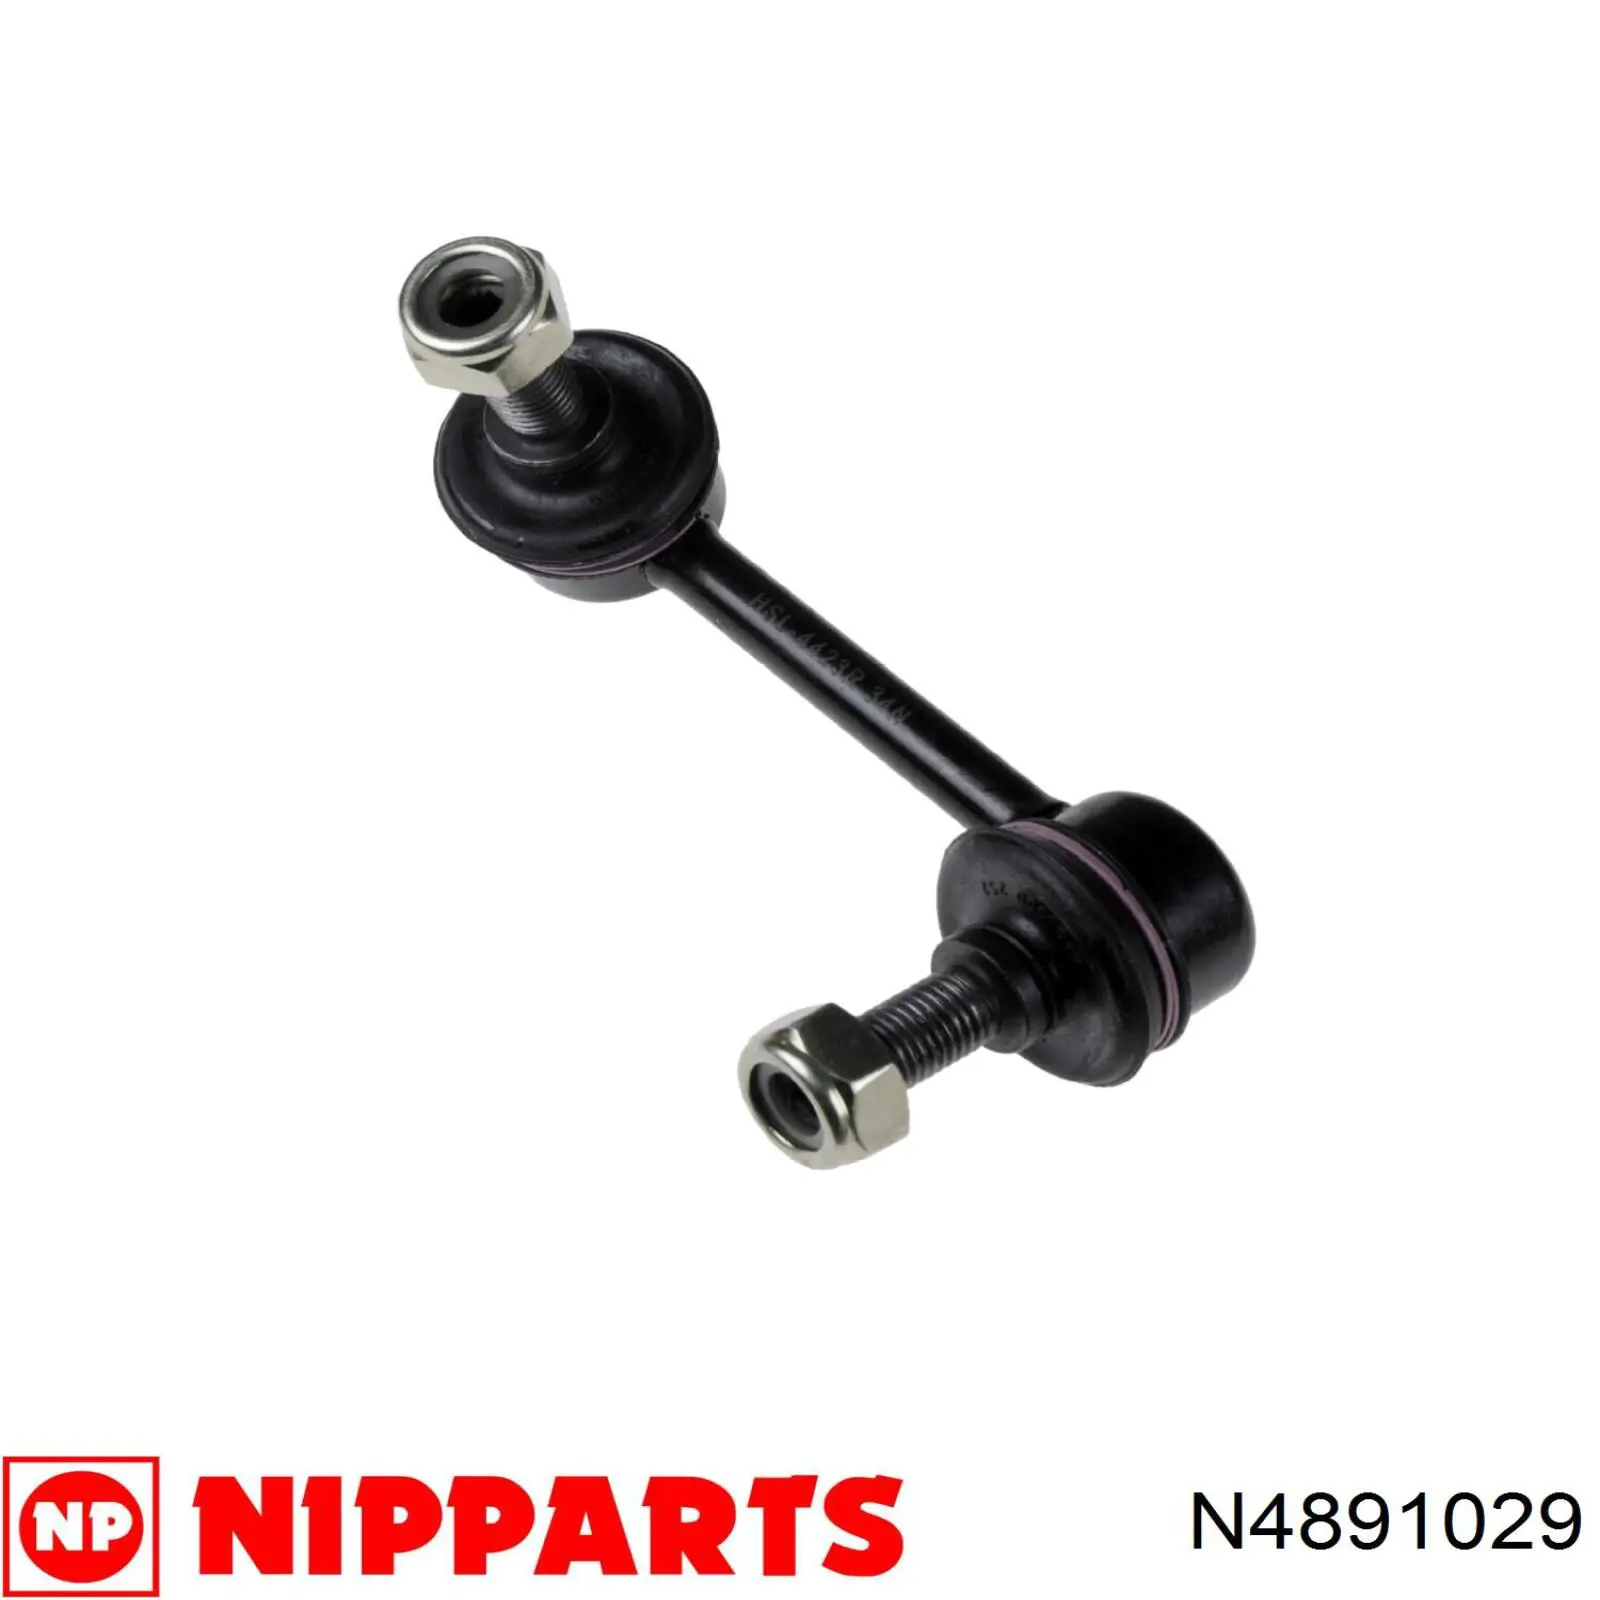 N4891029 Nipparts barra estabilizadora trasera derecha